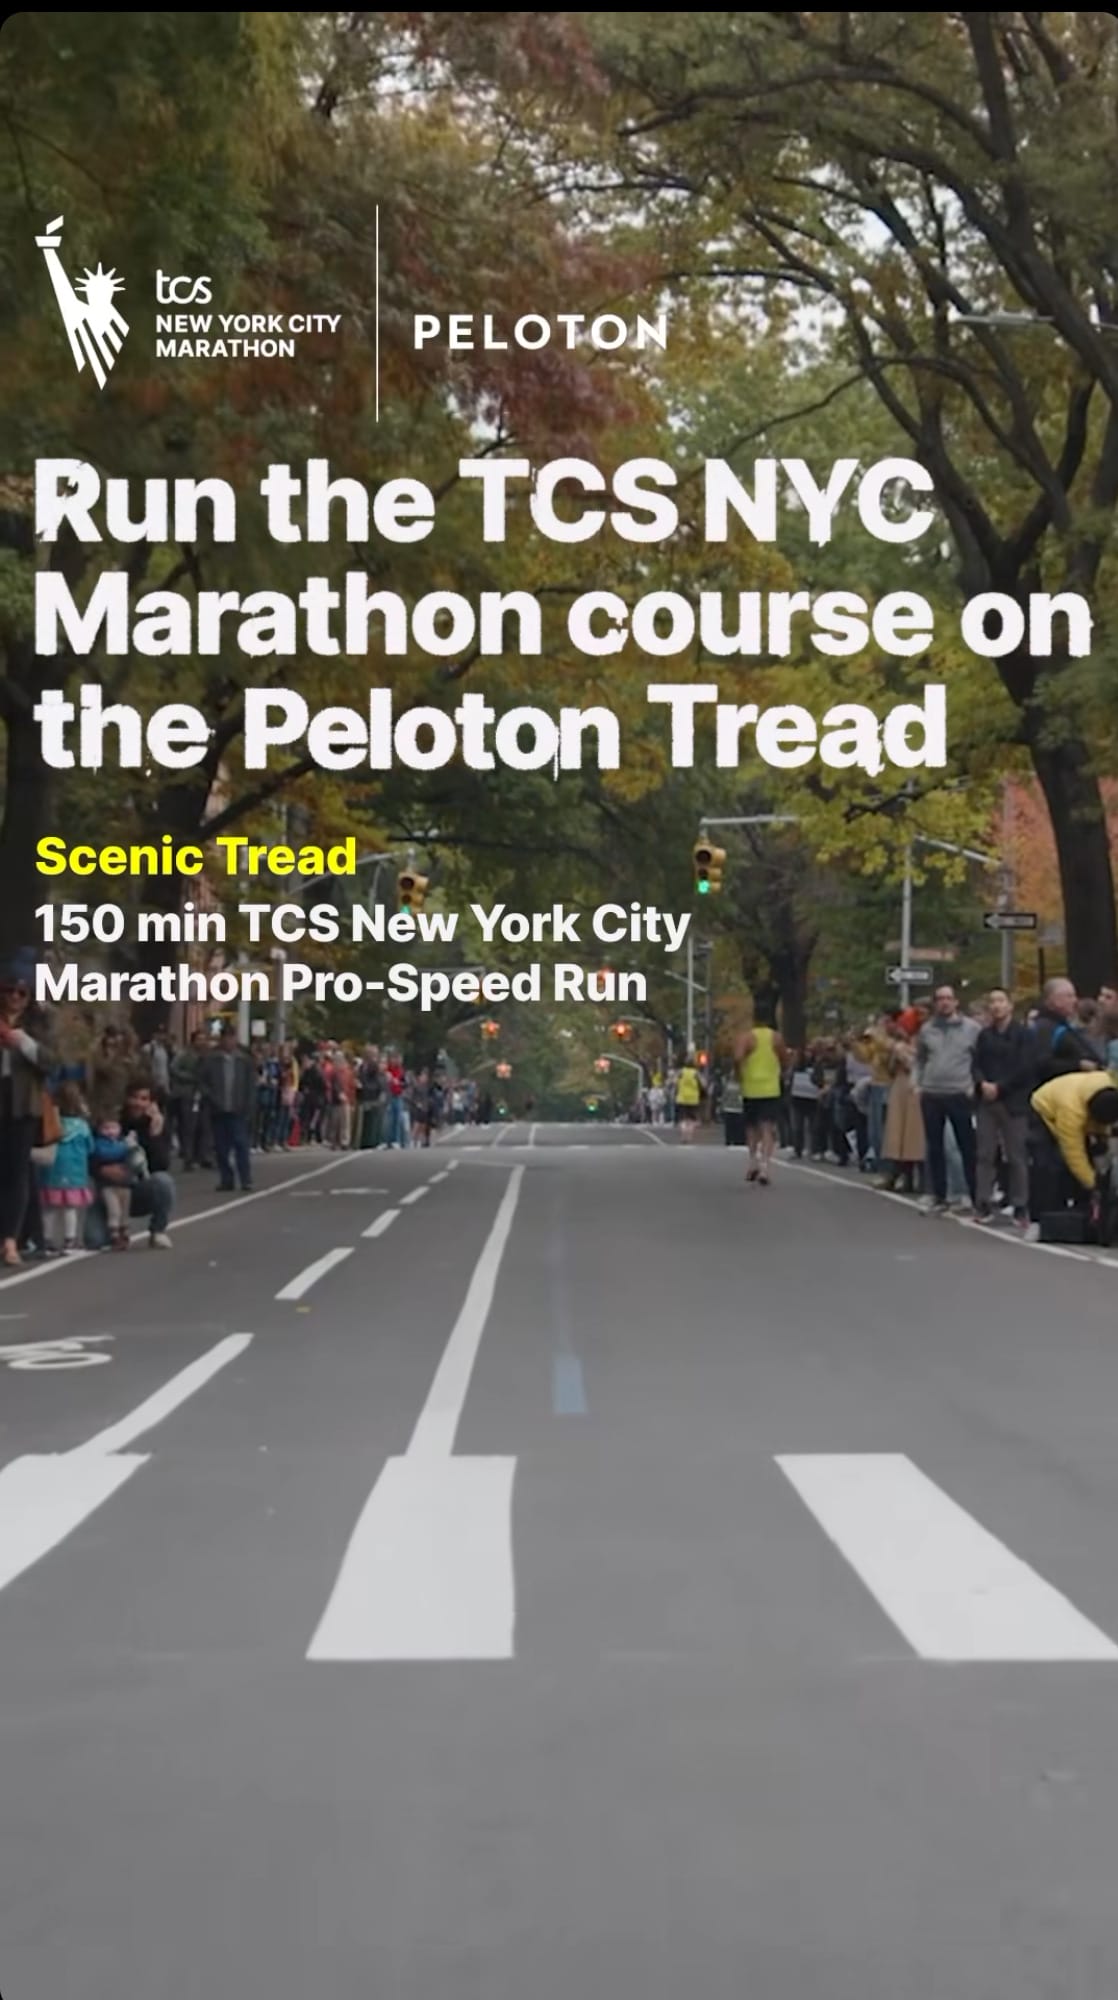 Peloton Instagram story highlighting new 150-minute scenic run through NYC Marathon course. Image credit Peloton social media.